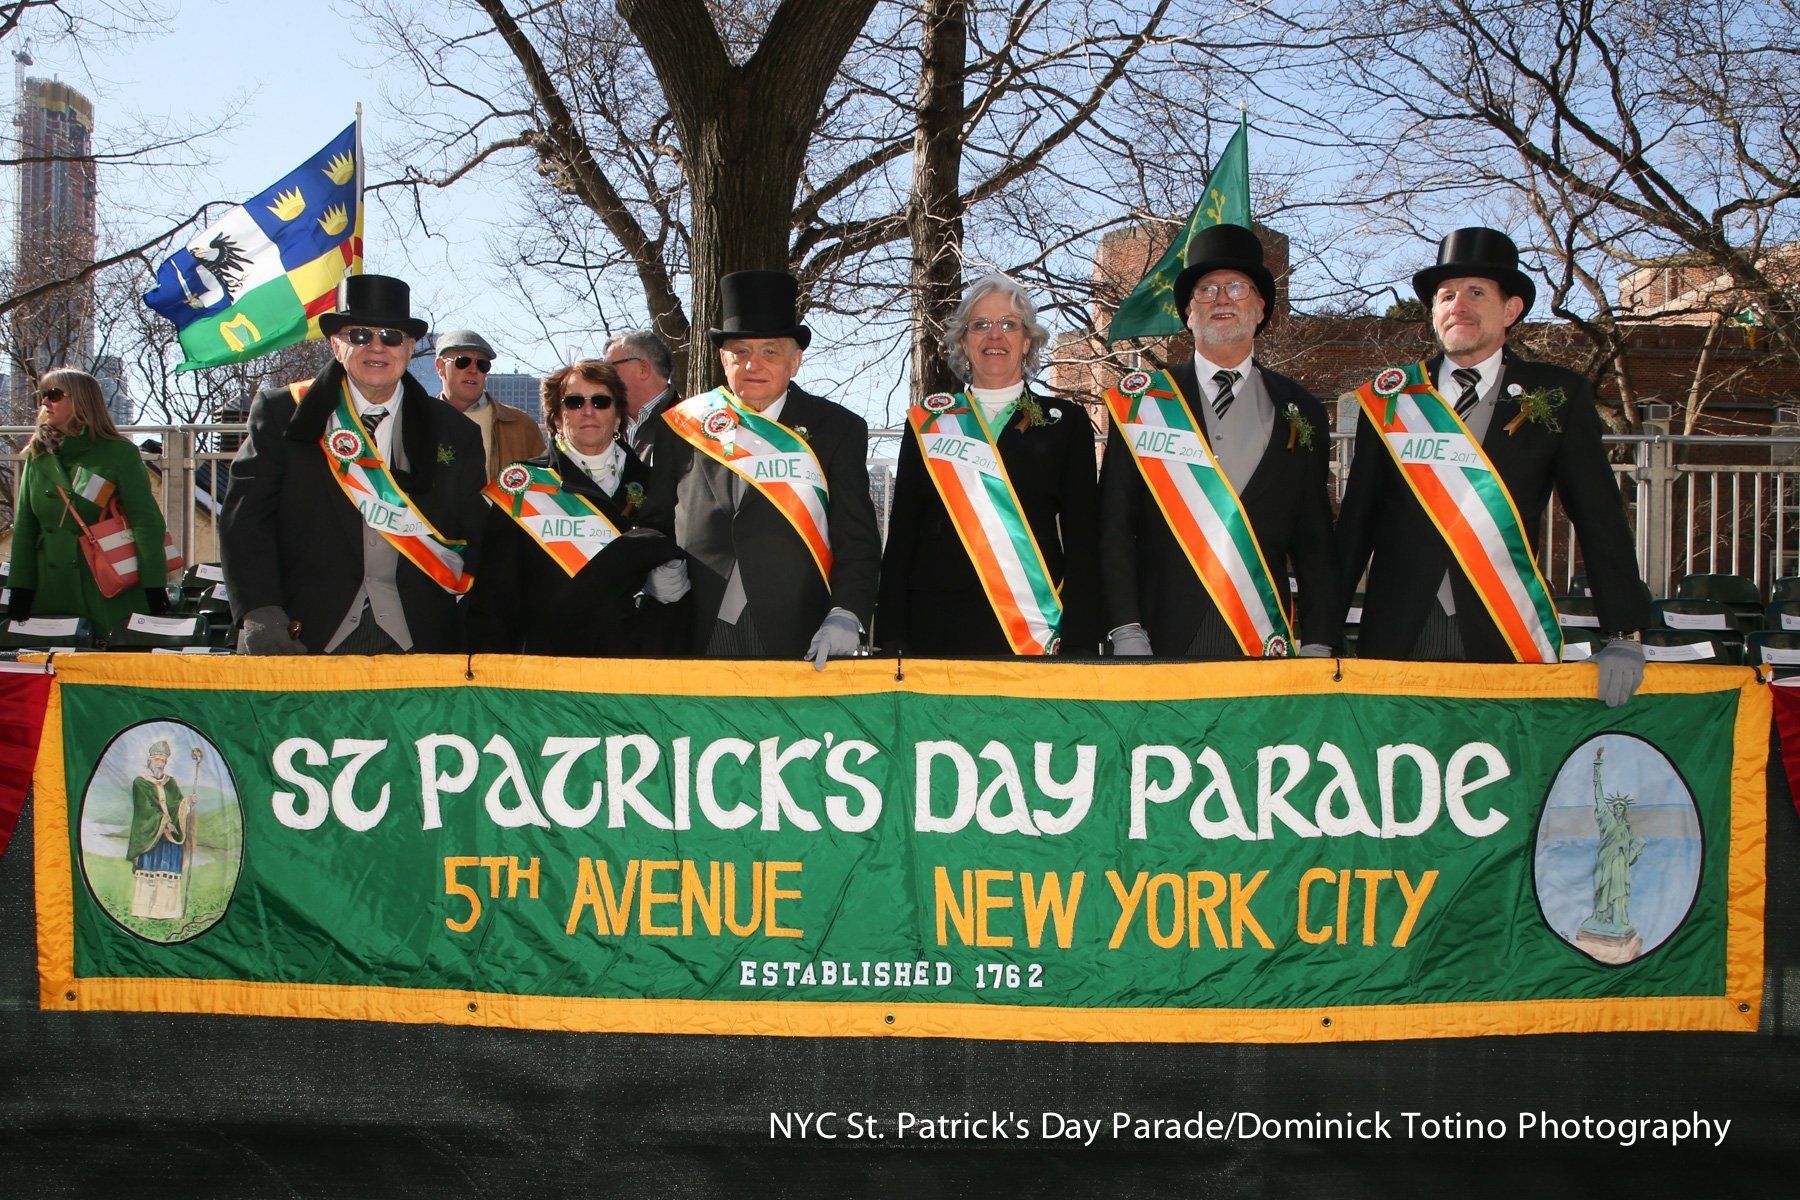 St Patrick's Day Parade on 5th Avenue, New York City